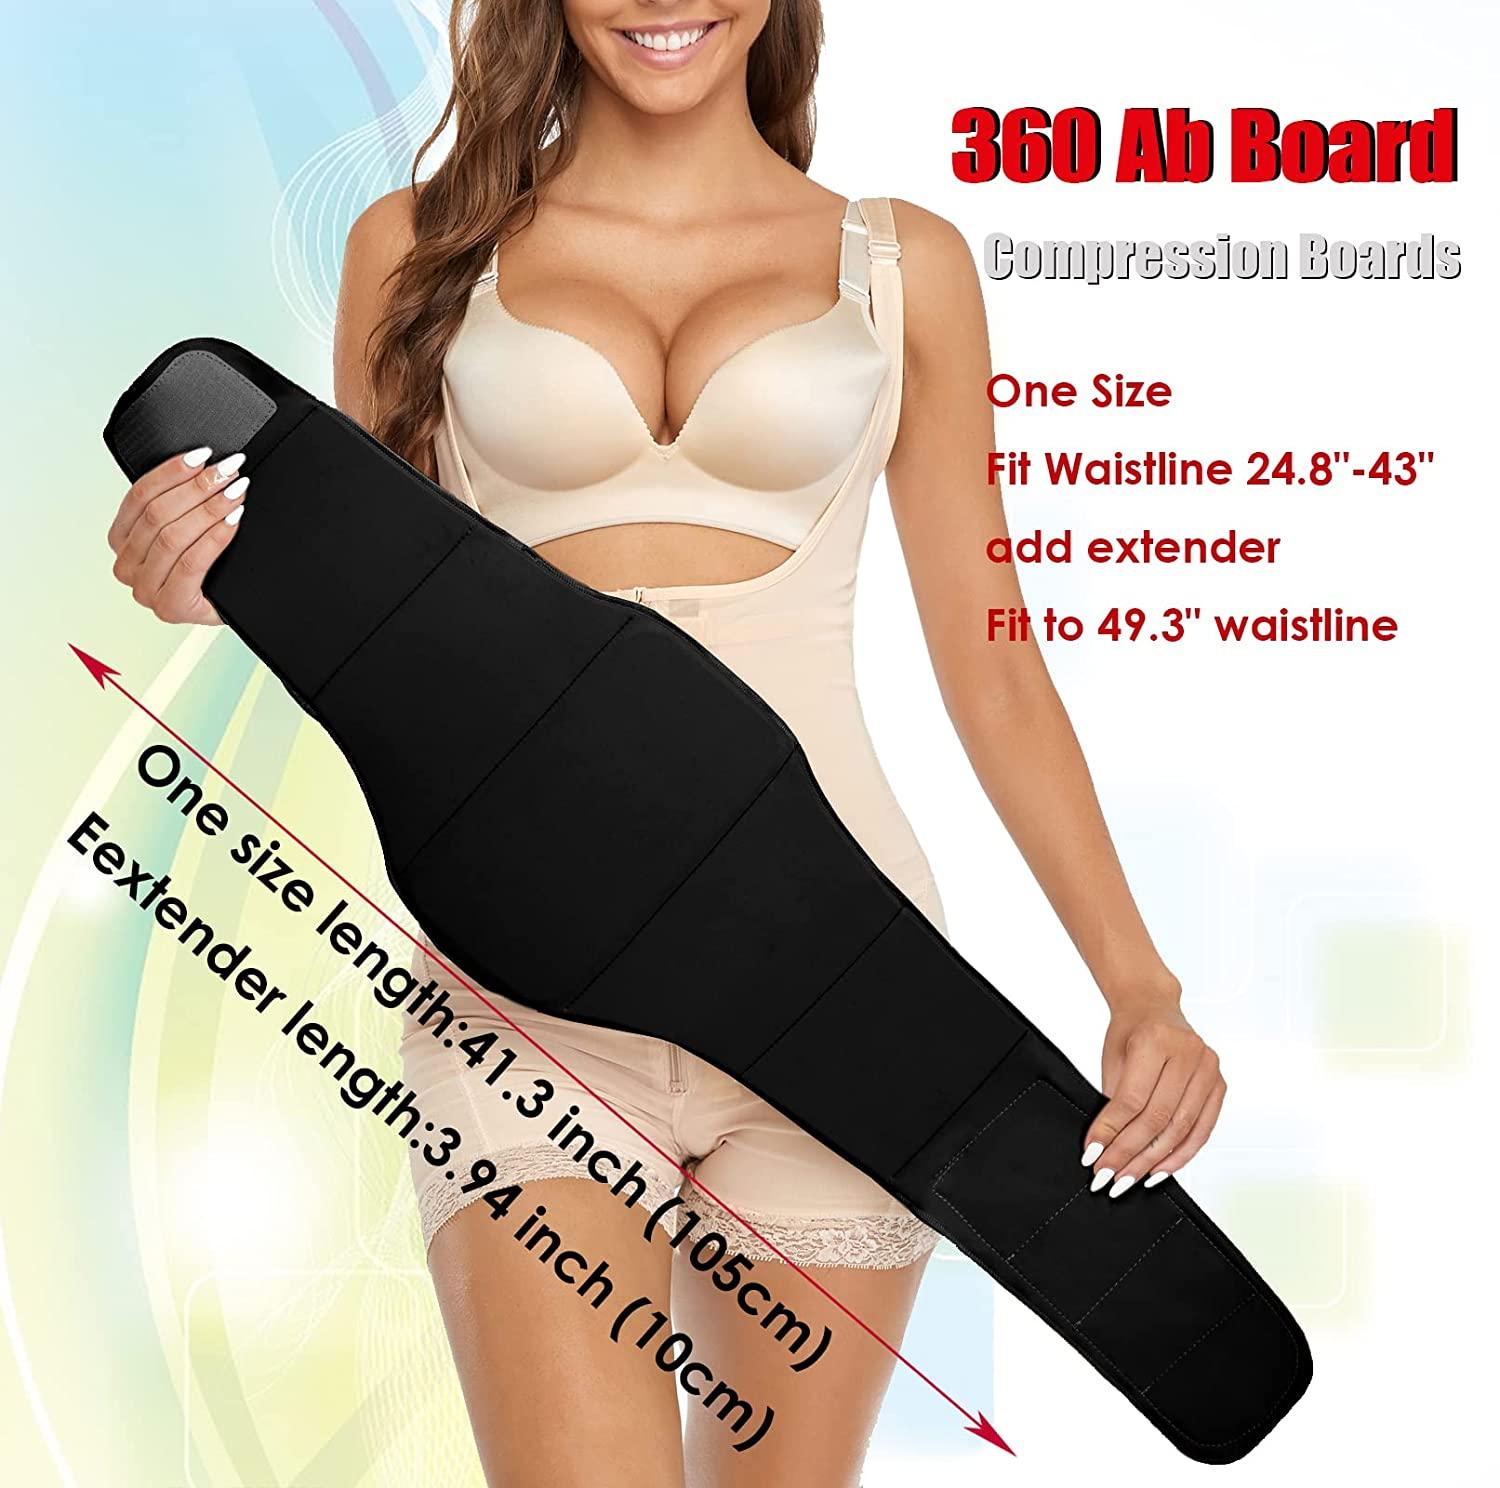  All About Shapewear Ab Board Post Surgery Liposuction 360, BBL  Supplies, Lipo Board Post Surgery, Tablas Post Operatorias para  Liposuccion